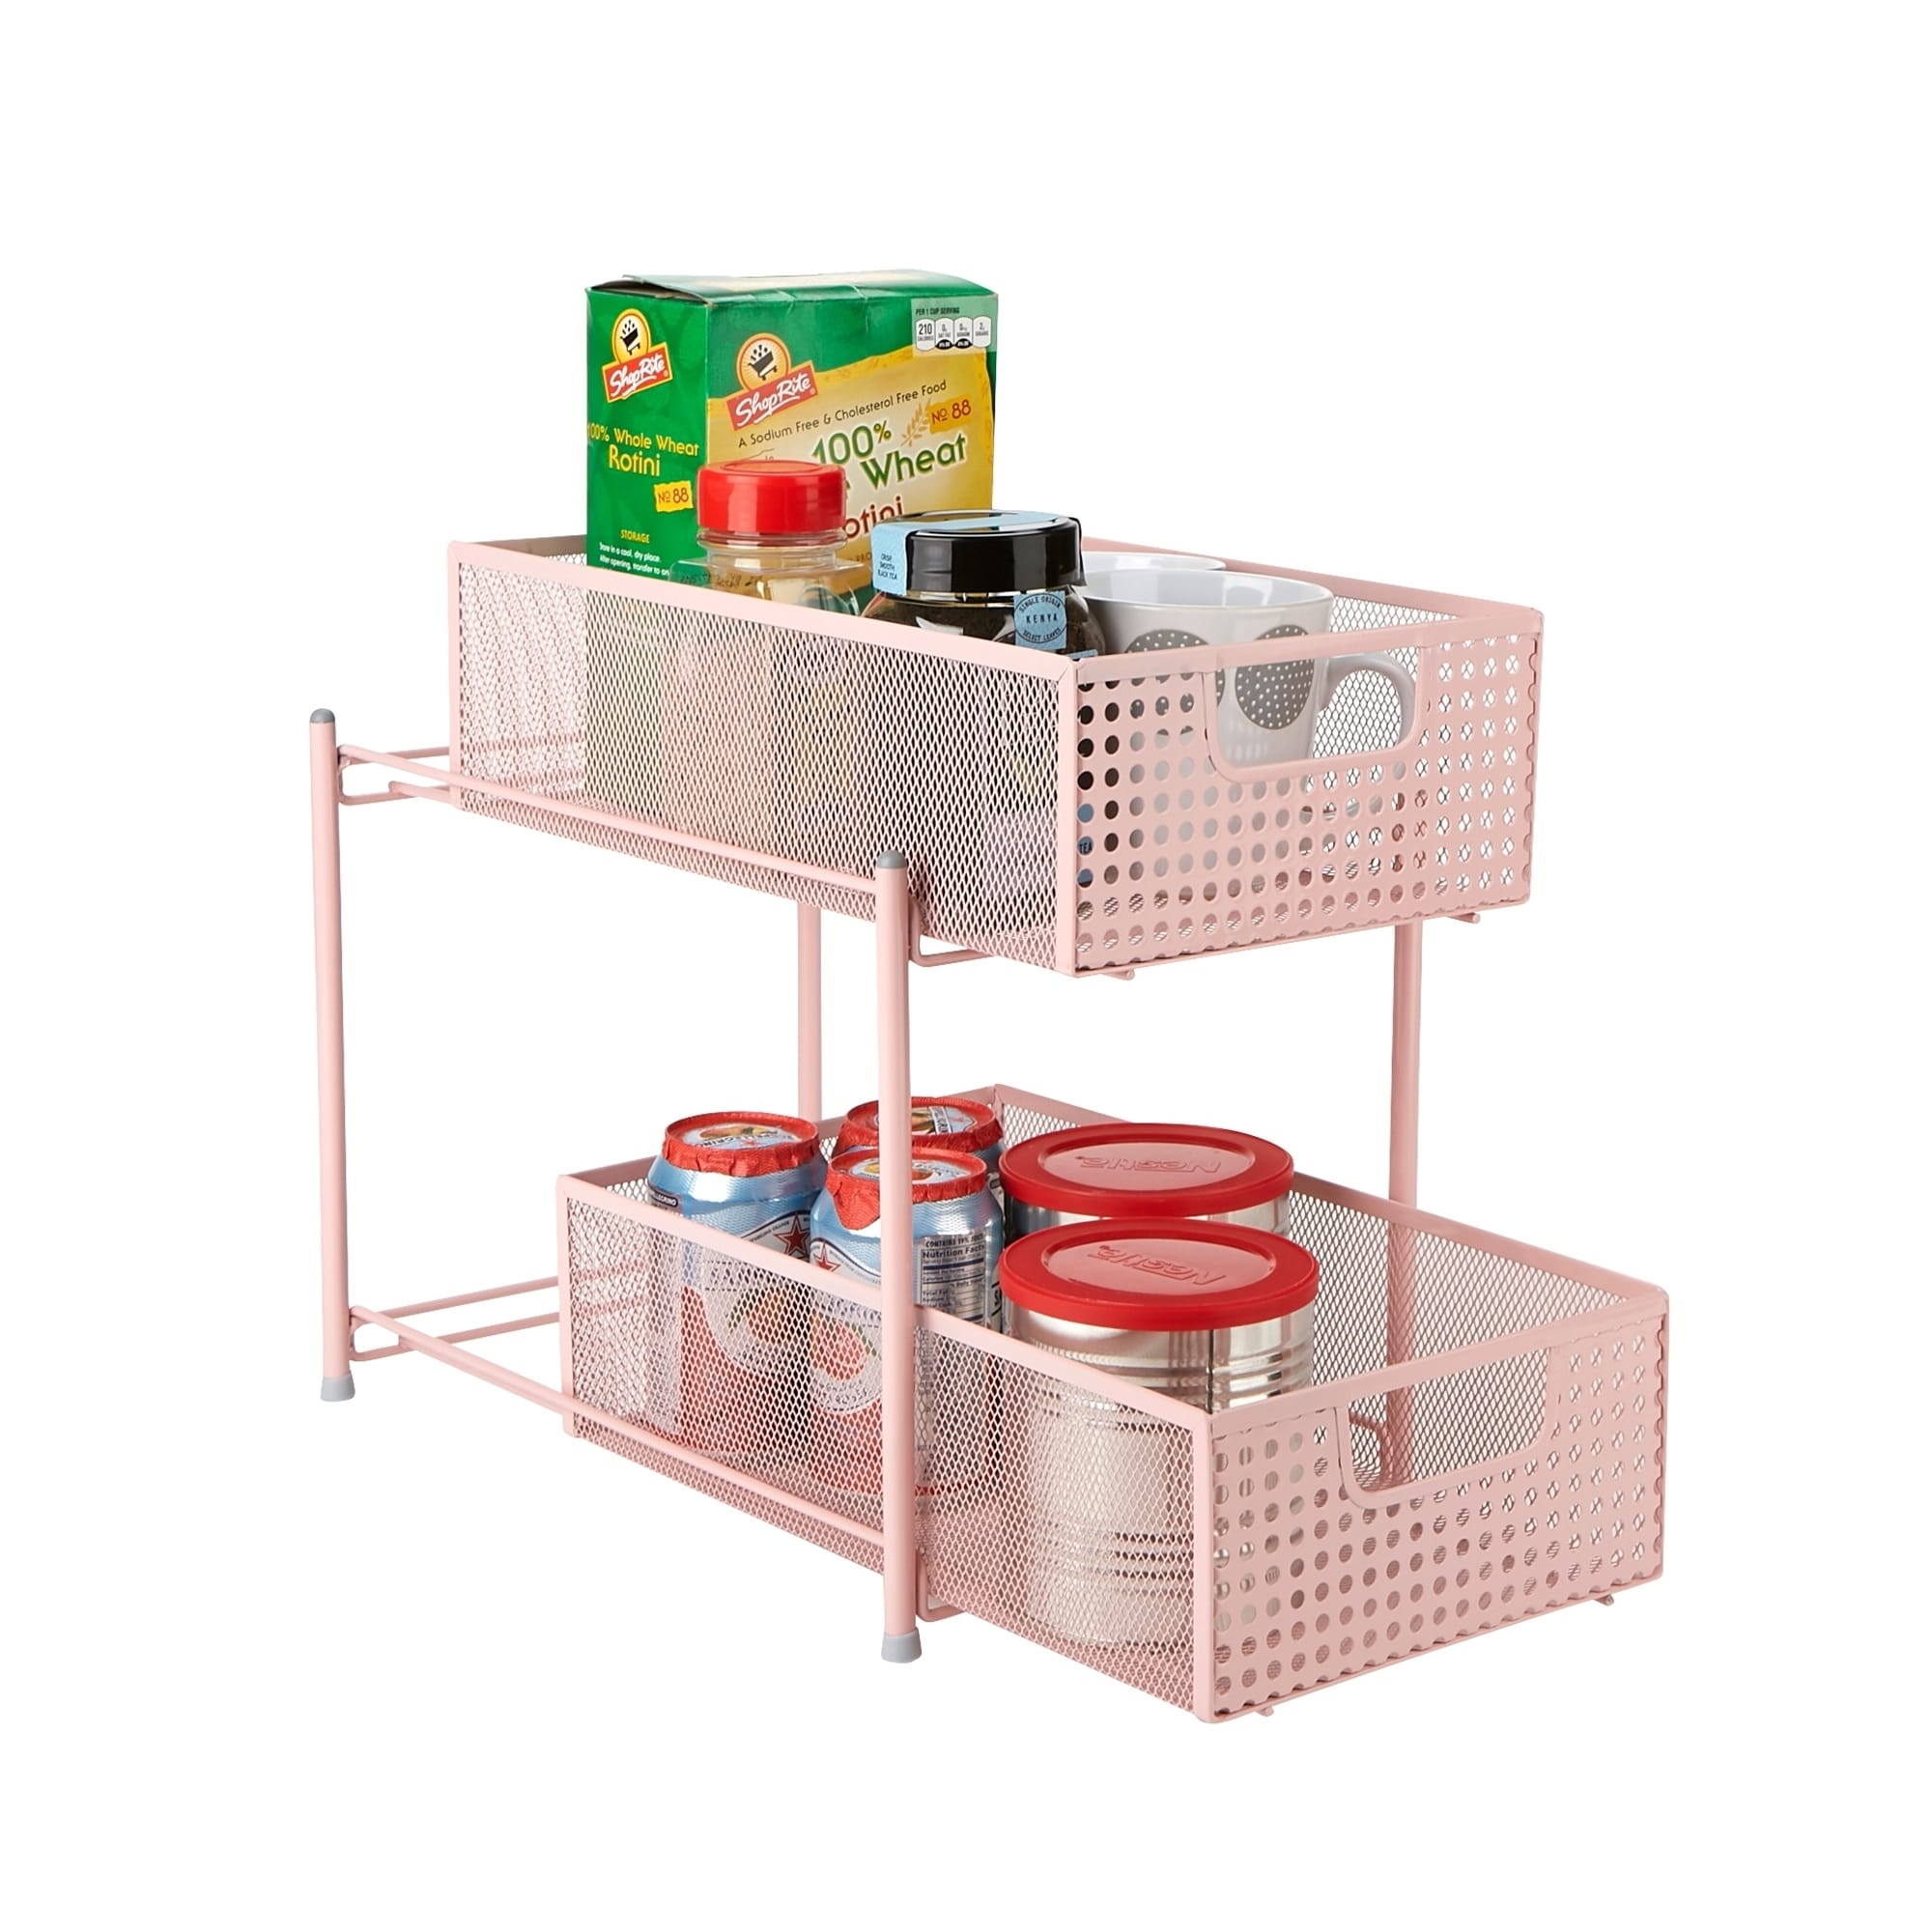 https://ak1.ostkcdn.com/images/products/26970885/Mind-Reader-2-Tier-Mesh-Storage-Basket-Organizer-Home-Kitchen-Pink-8c1b05d0-75cb-4327-817a-f1cc127d5ac0.jpg